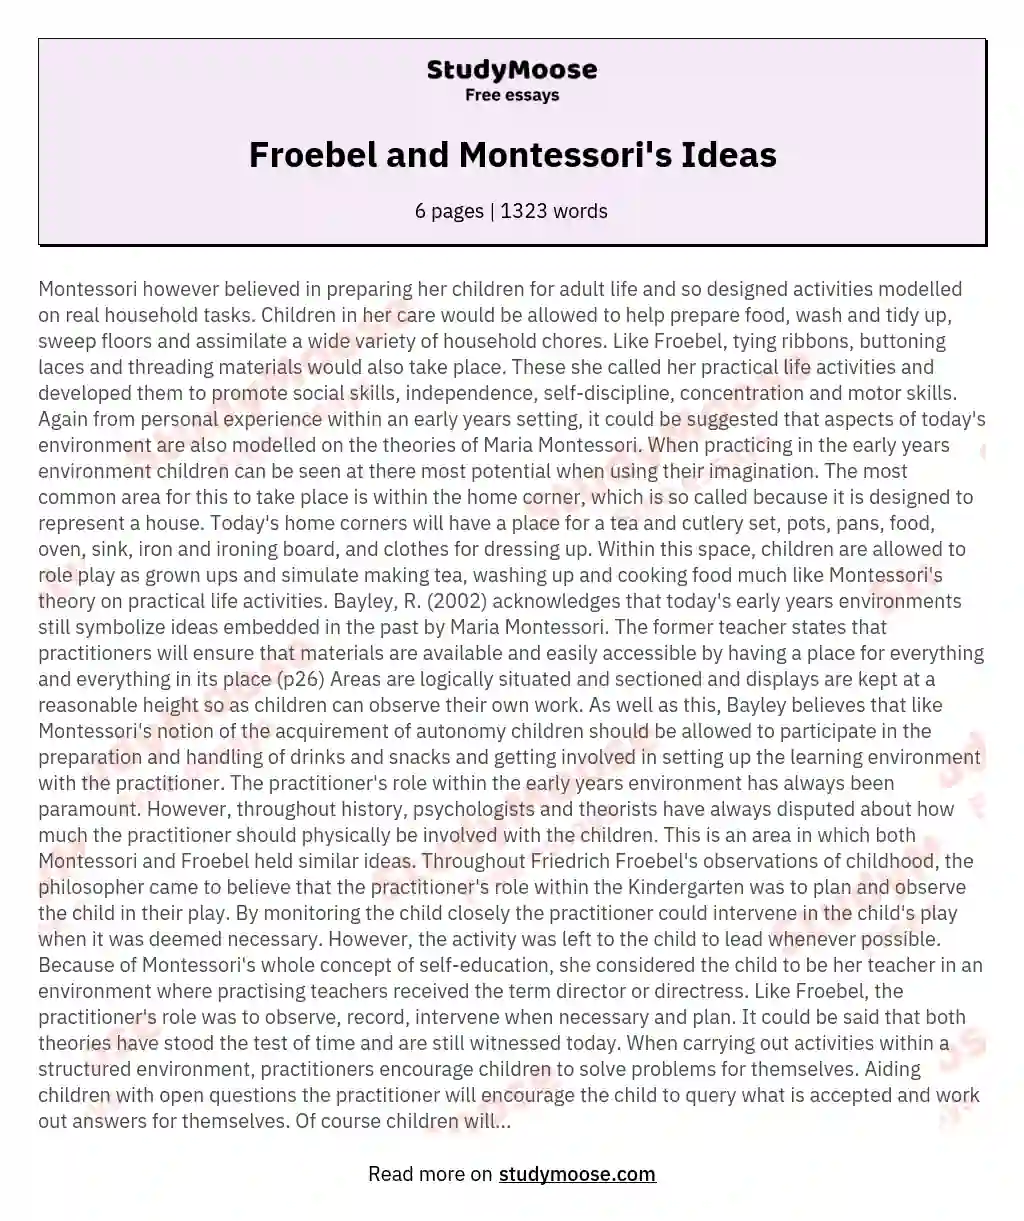 Froebel and Montessori's Ideas